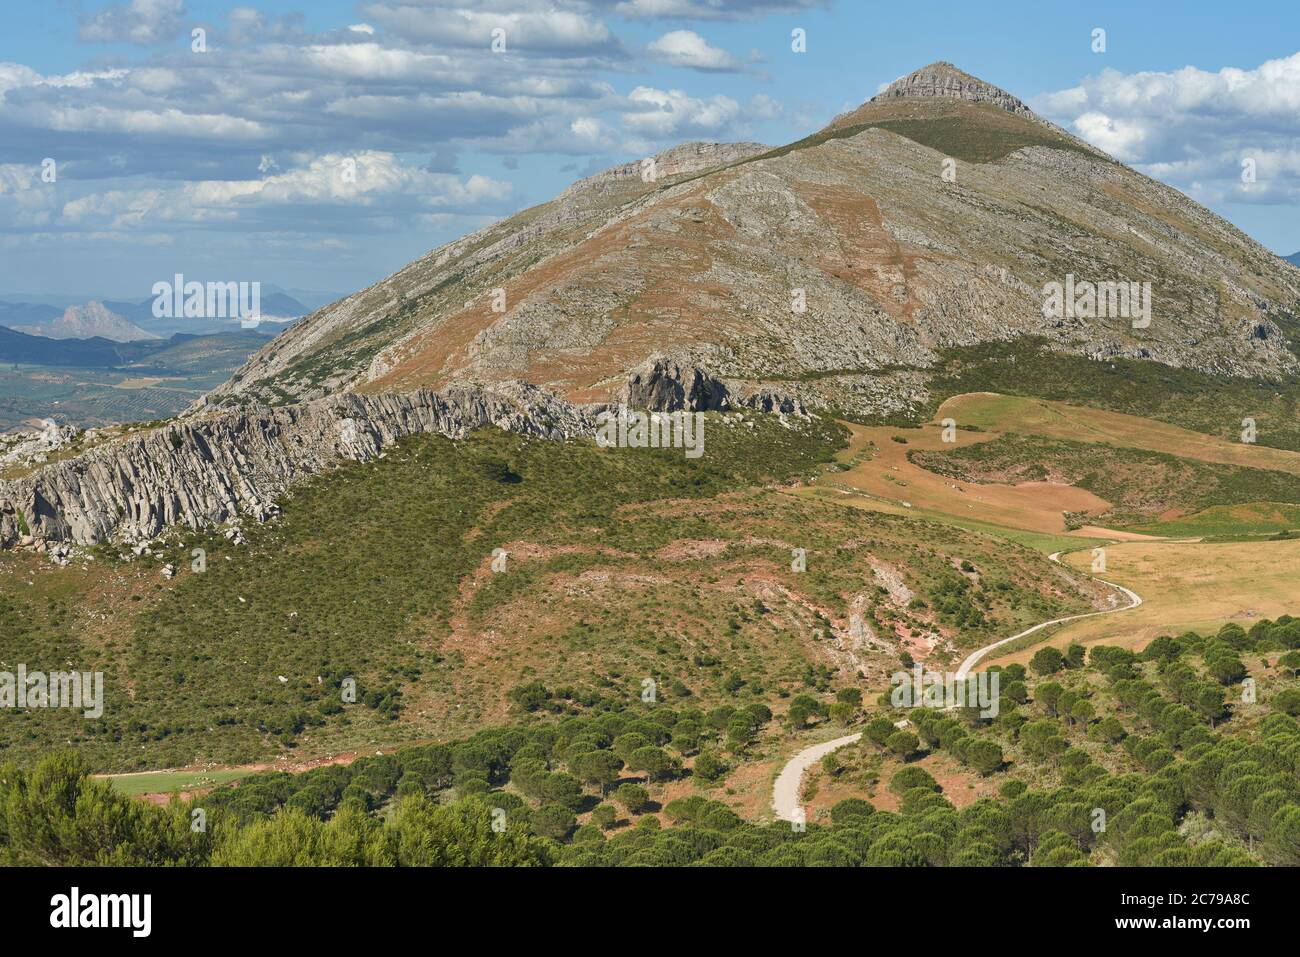 La Capilla, Kalkstein-Gipfel und Bergkette im Abdalajis-Tal, Malaga. Spanien. Stockfoto